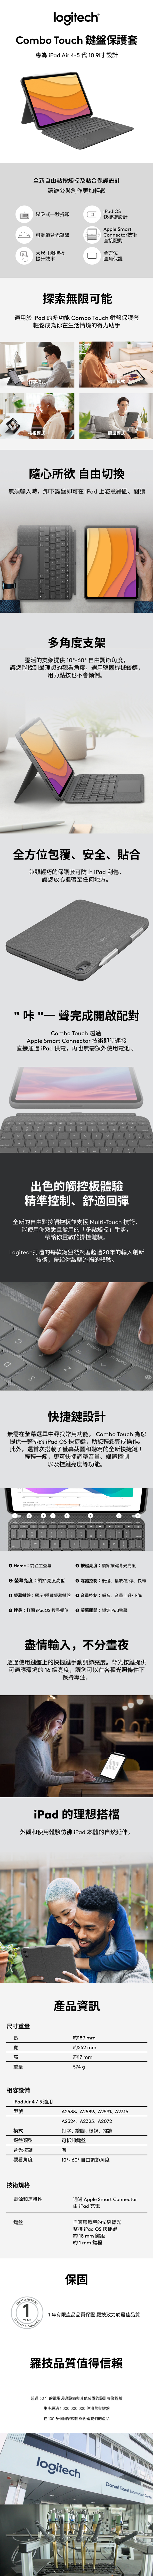 lgitech®Cmbo ouch LO@MM iPad Air -5N 9T]psIĲΦXO@]p줽PЧ@[PiPad OSϧl@ֱ]piո`ILApple SmartConnector޳NtjؤoĲO촣ɮĲvꨤO@LiAΩ iPad h\ Combo Touch LO@MPAbͬҪoOU⥴rҦøϼҦ˵Ҧ\ŪҦHߩұ ۥѤLJɨULYibiPadWNøϡB\Ūhפ[F[1-0Xۥѽո`,z̲zQ[ݨ,ΰT,ΤOI]|ɭ˥]СBwBKXUO@MiiPad ,zaܥaC咔  n}ҰtCombo Touch zLApple Smart Connector ޳NYɳsqL iPad ѹq,A]LB~ϥιq C5XoERTYoPBNMX⪺ĲOǱBξA^usۥIĲOä䴩 Multi-Touch ޳N,ϥΧAxBRΪuhIĲv,aAFӪޱCLogitechyCLE۶WL20~Jзs޳N,aAVyZCrurnֱ]pLݦbù椤M`Υ\, Combo Touch zѤ@ƪ iPad OS ֱ,UzPާ@C~,٭fFùIϩMťgsֱ仴@Ĳ,iֱվ㭵qBC鱱HαG׵\C1ket AnalysisMarLorem  lor sit amet, consectetur adipiscing ,  do suspendisse ultrices gravida  coodo       labore et dolore magna aliqua.  ipsum!12Q6